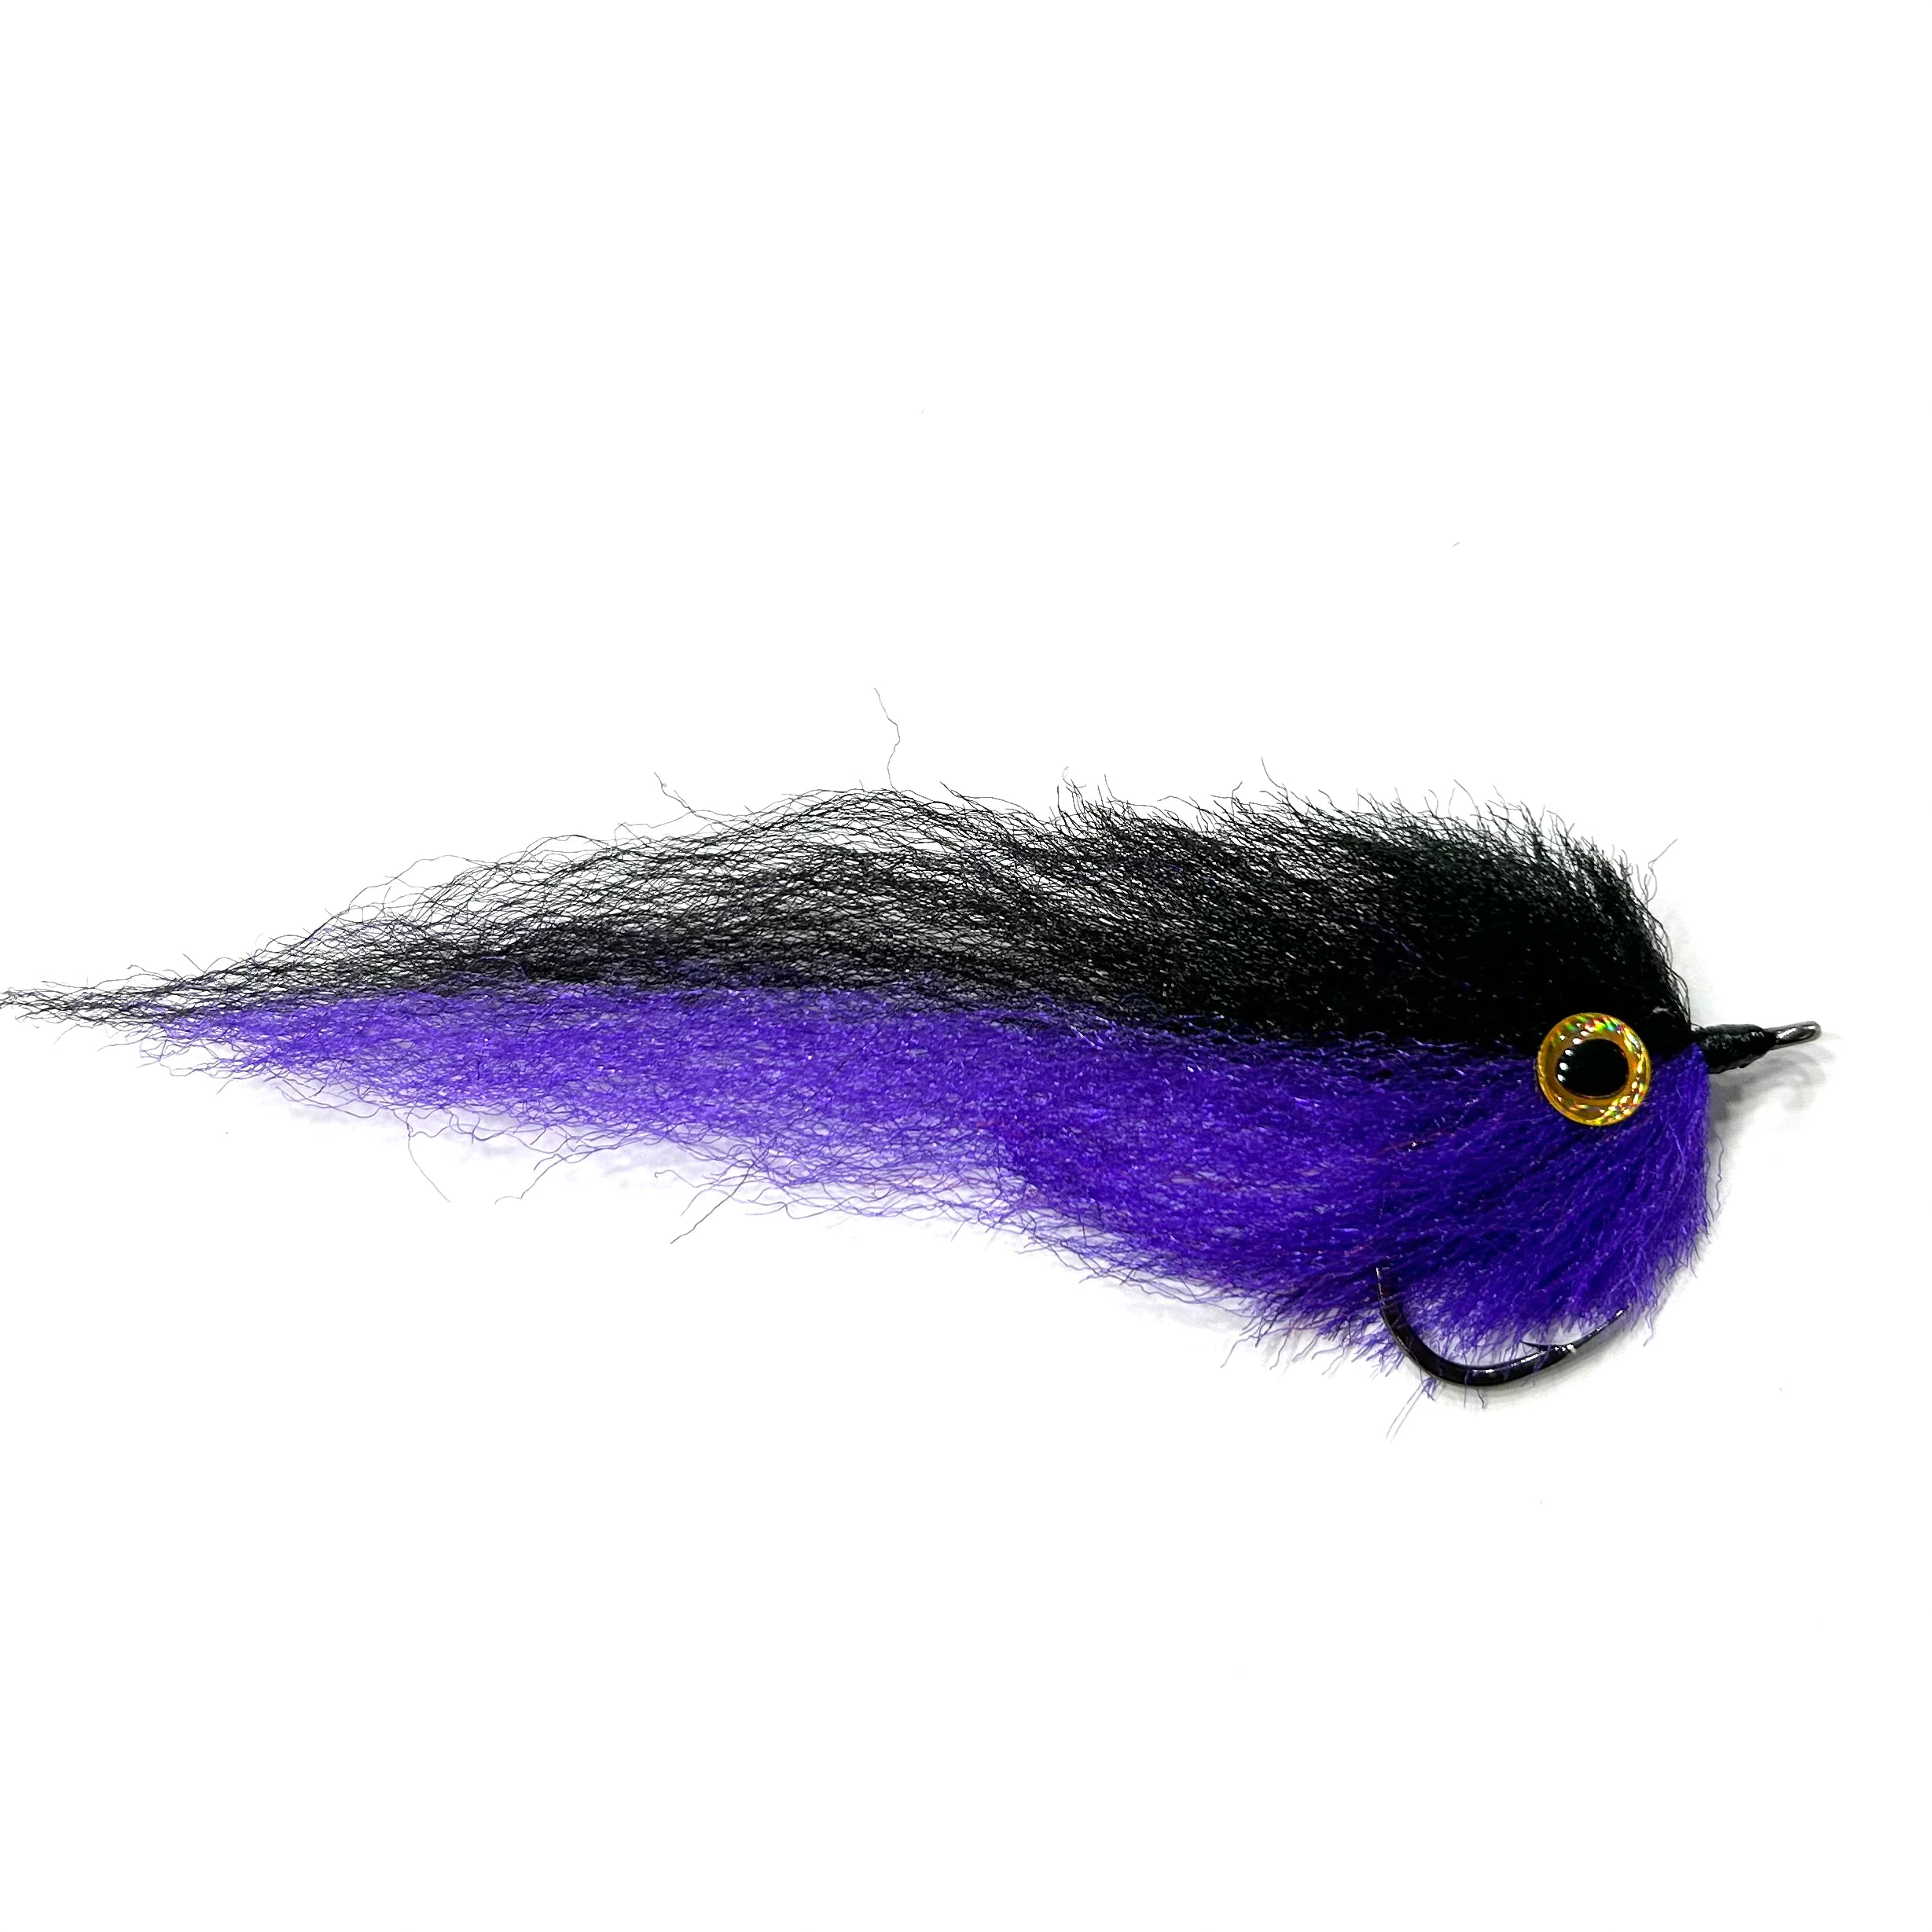 5” Baitfish Black/purple